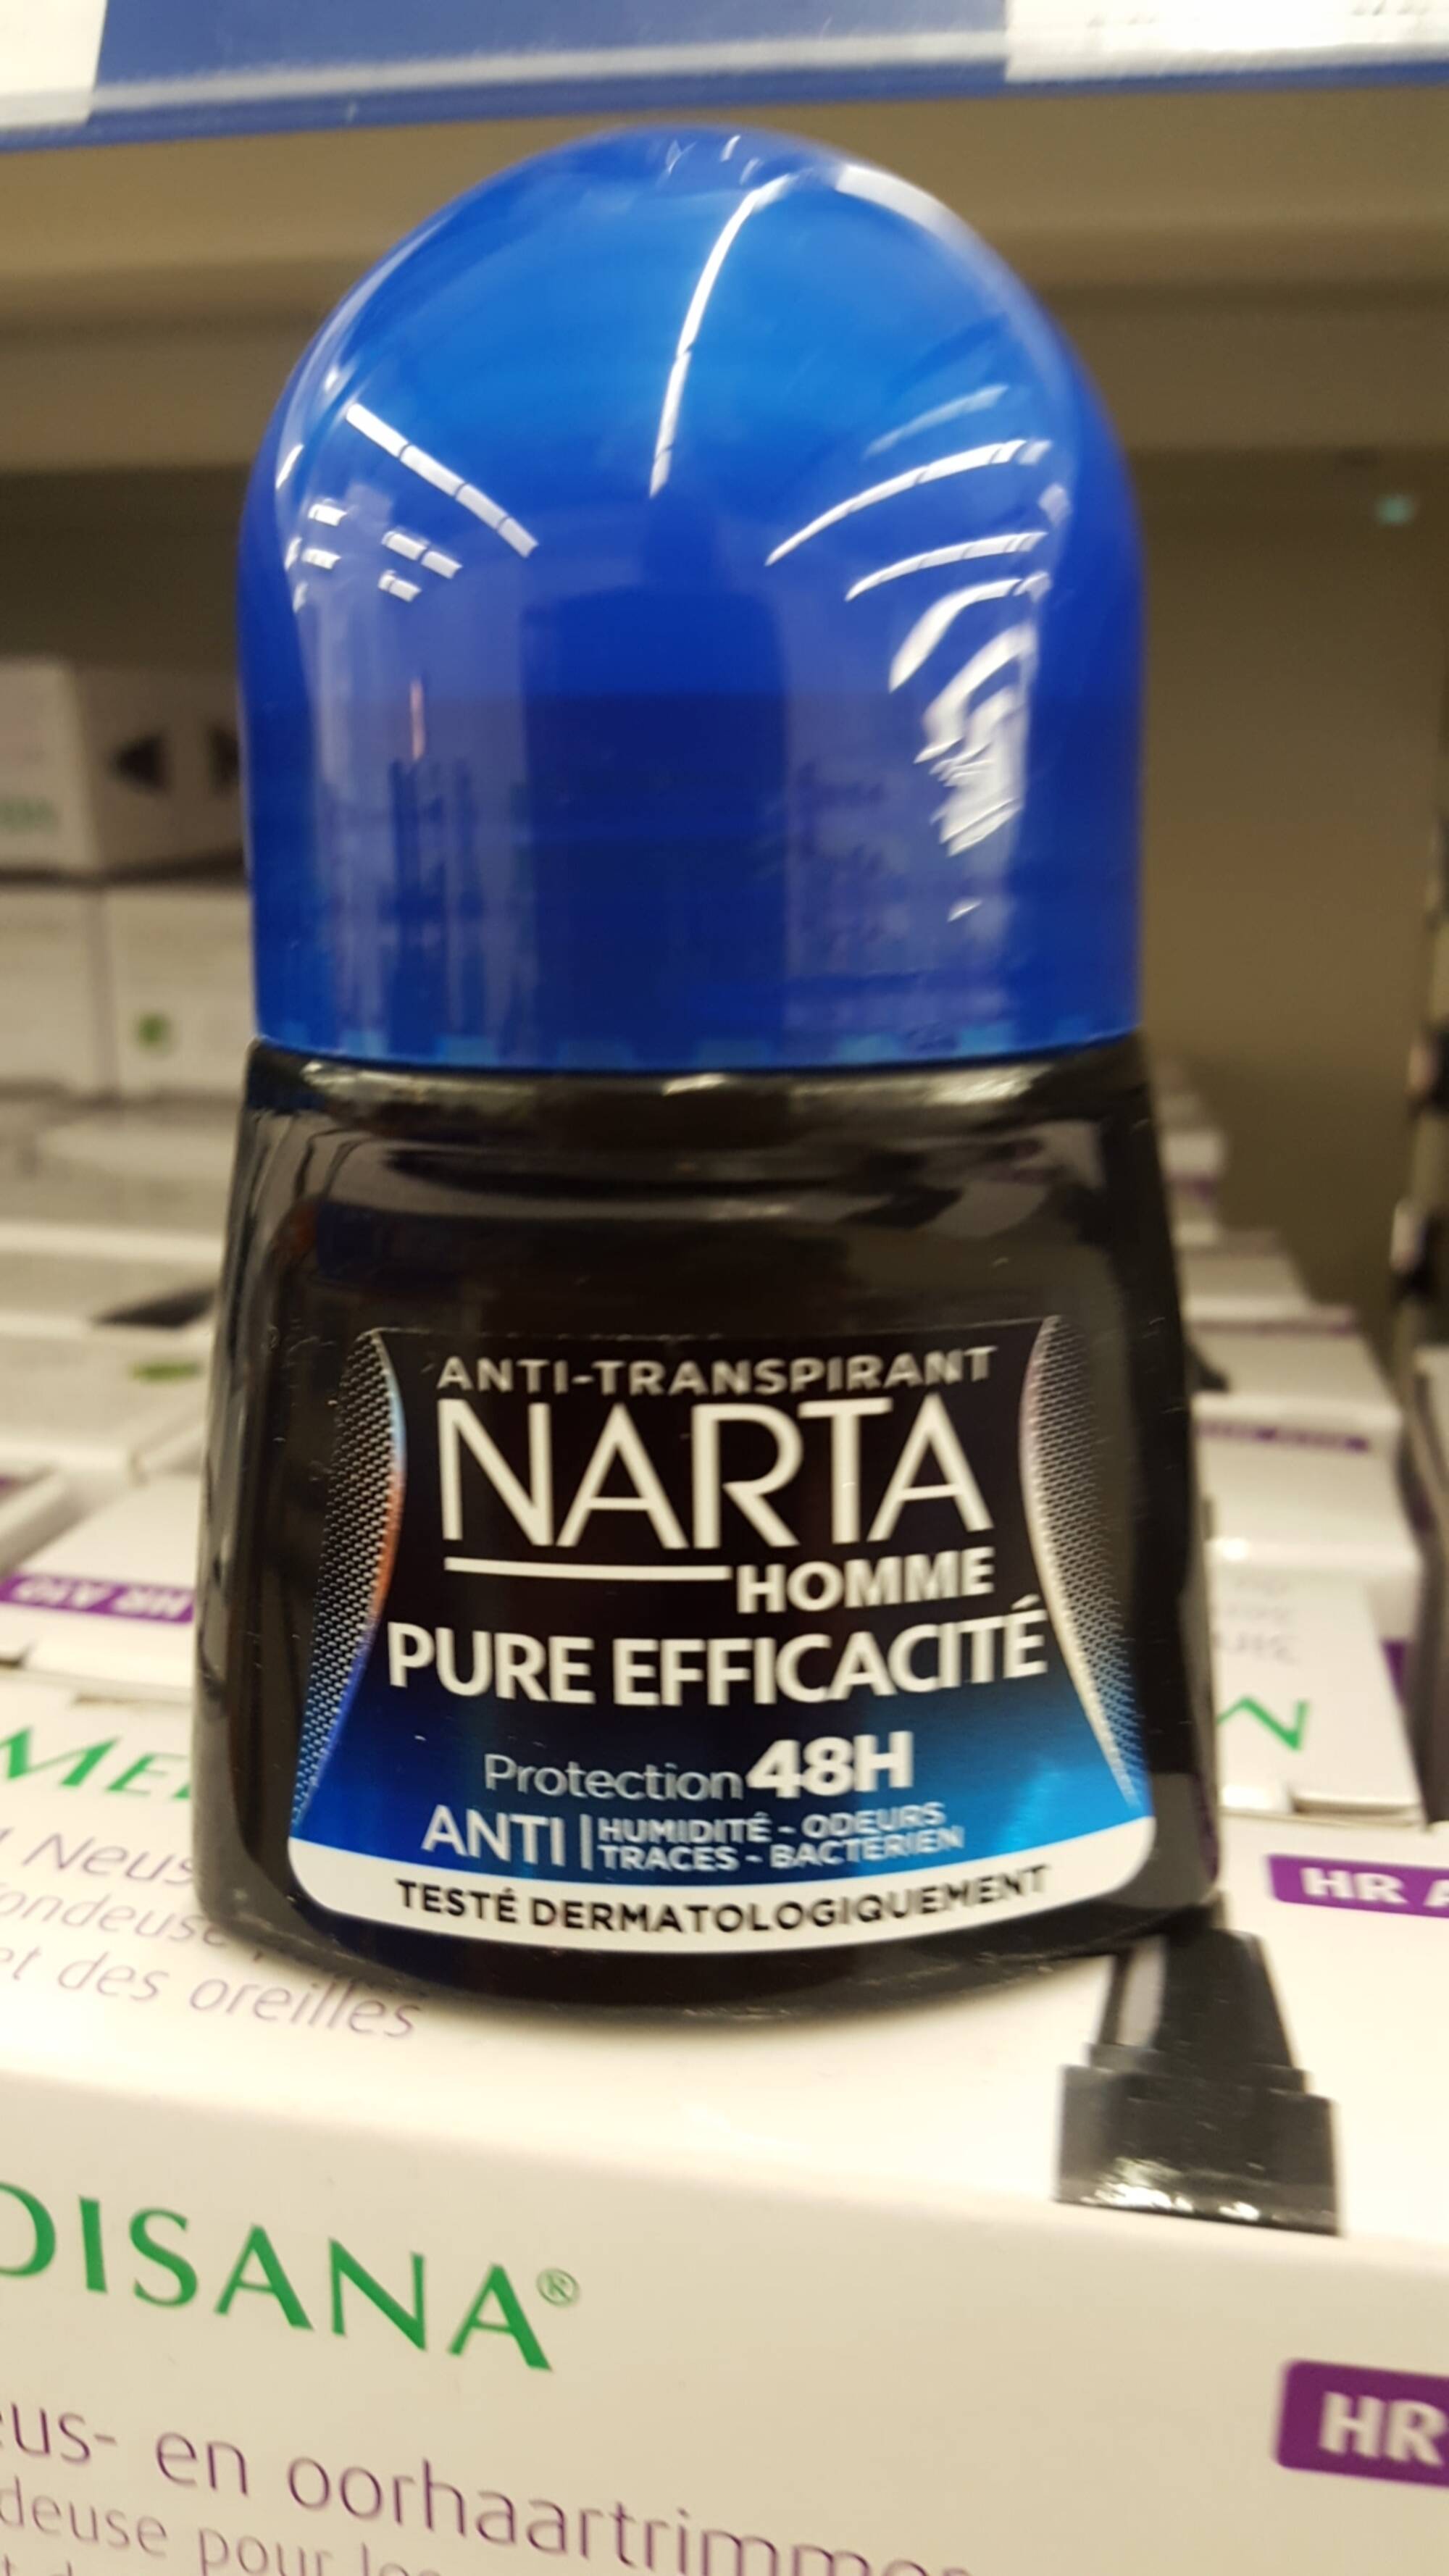 NARTA - Homme Pure efficacité - Anti-transpirant 48h